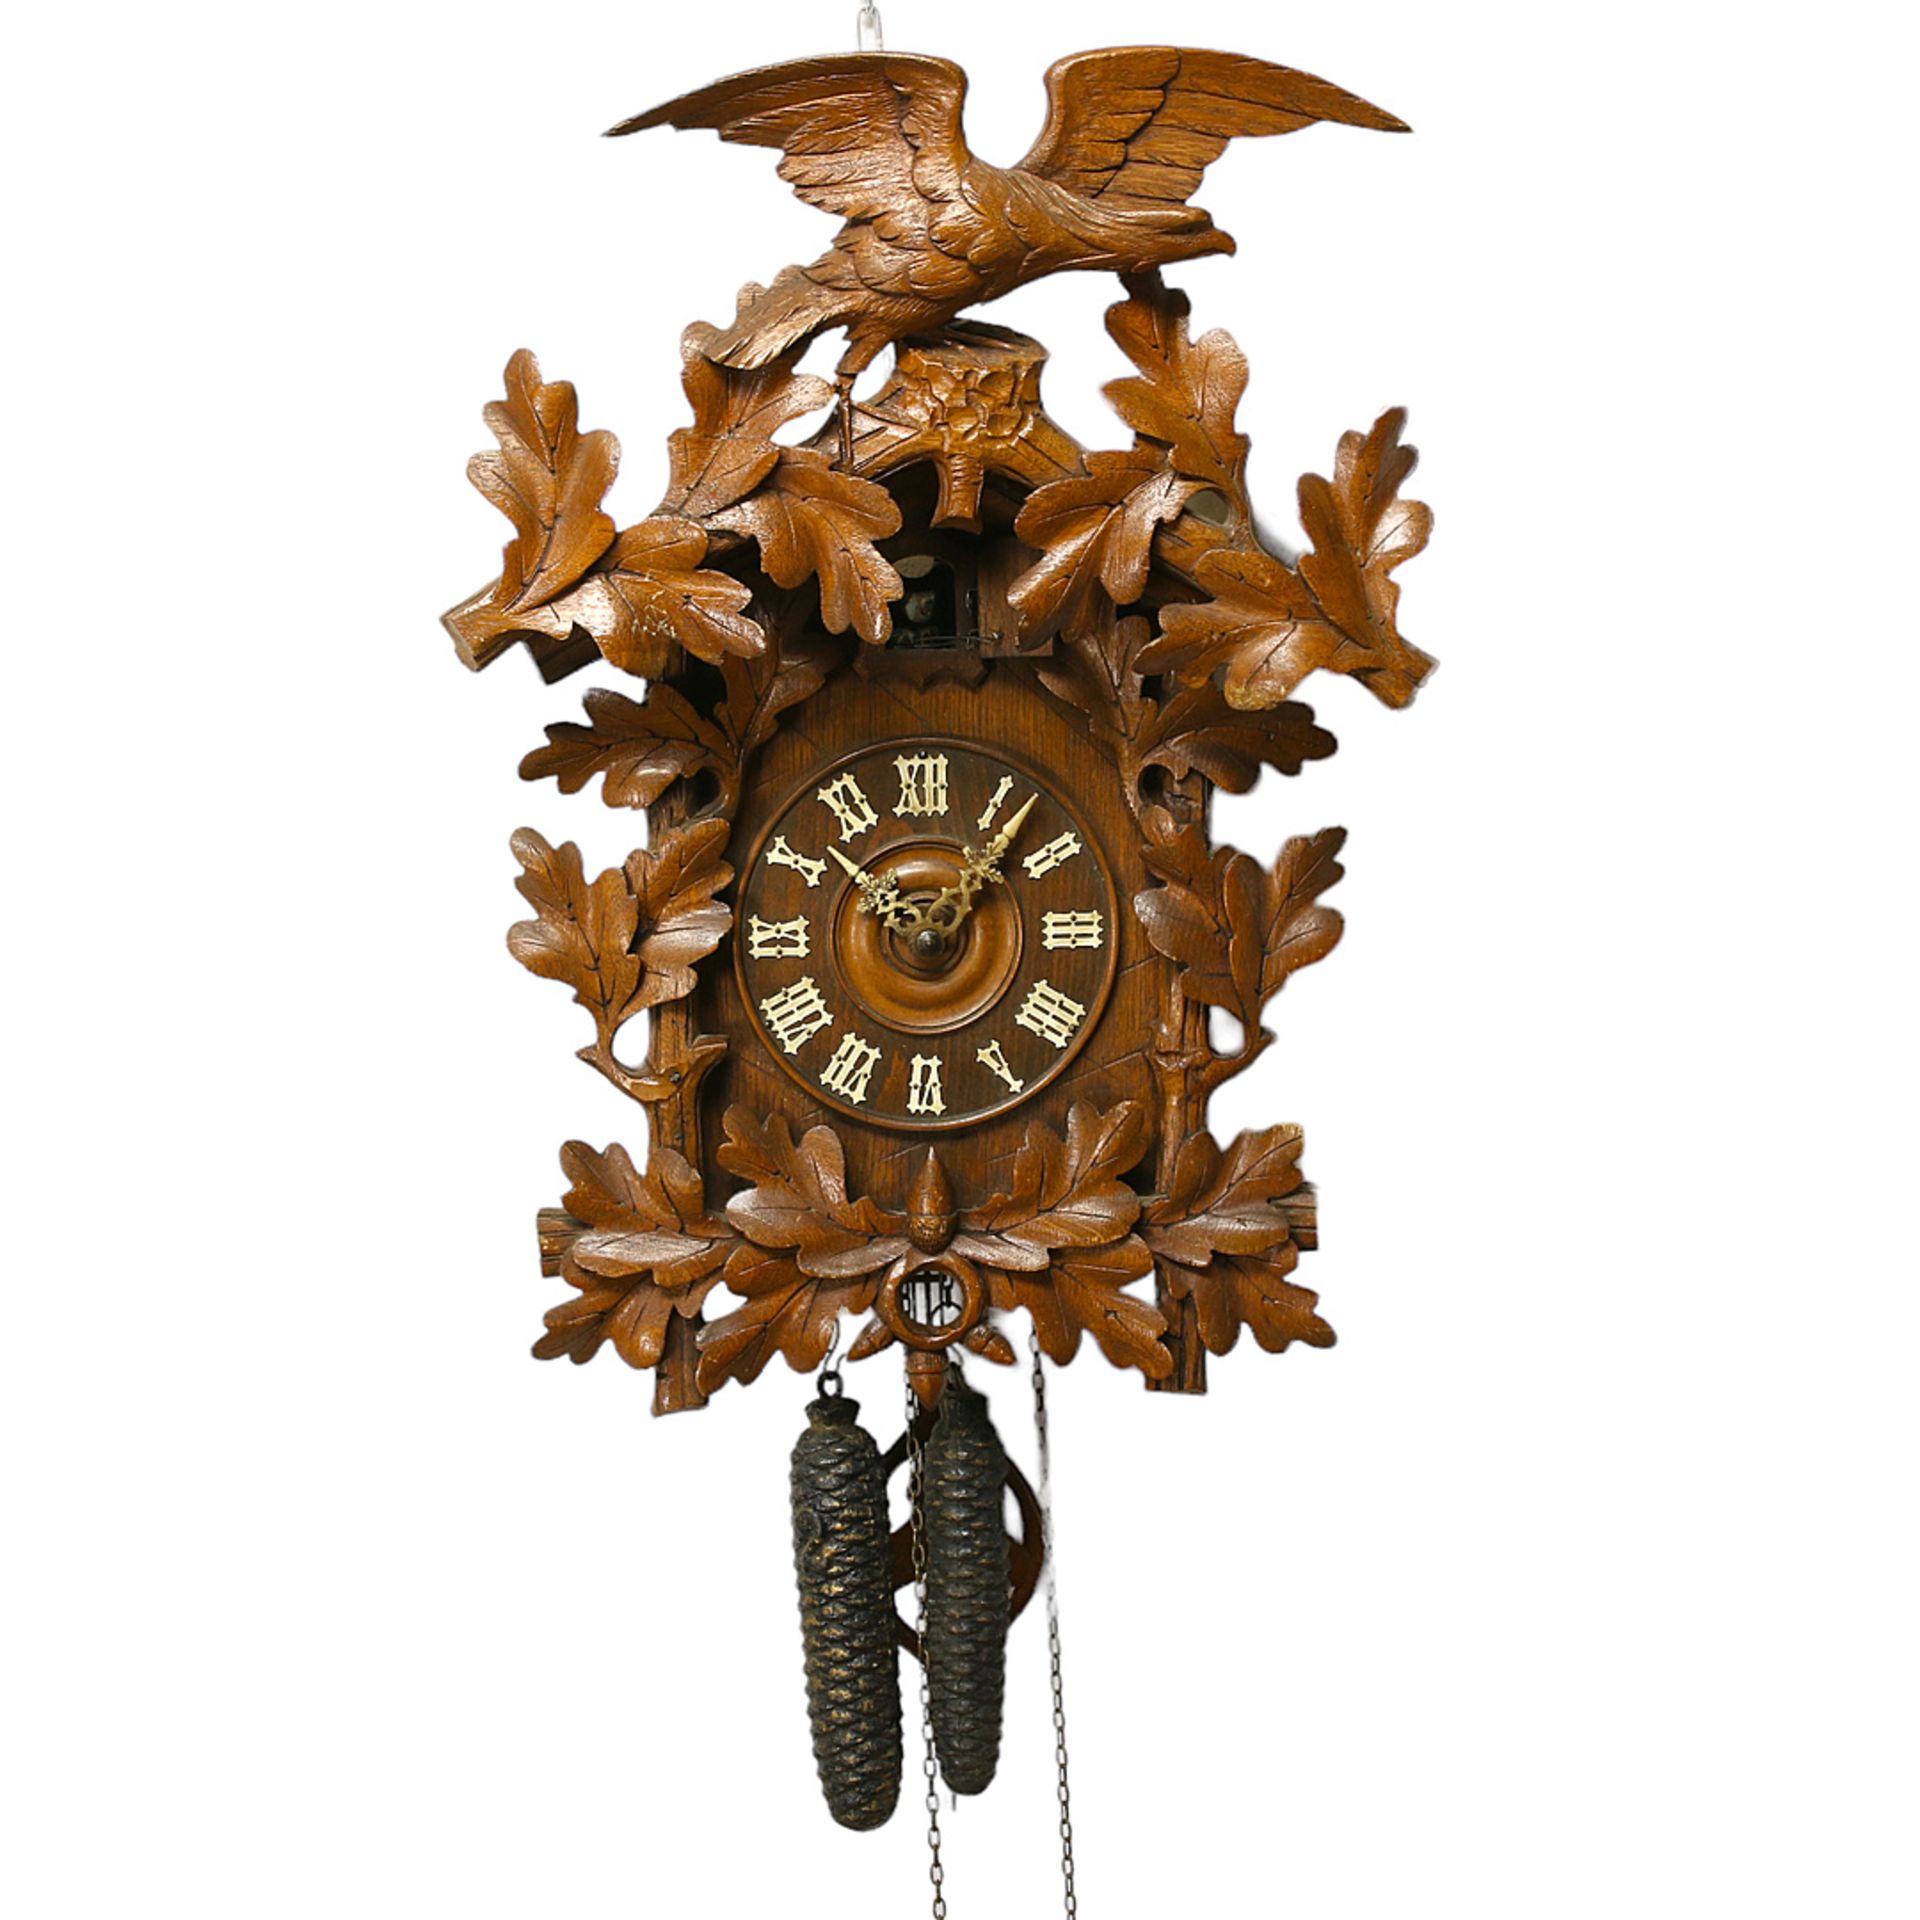 Cuckoo clock with eagle